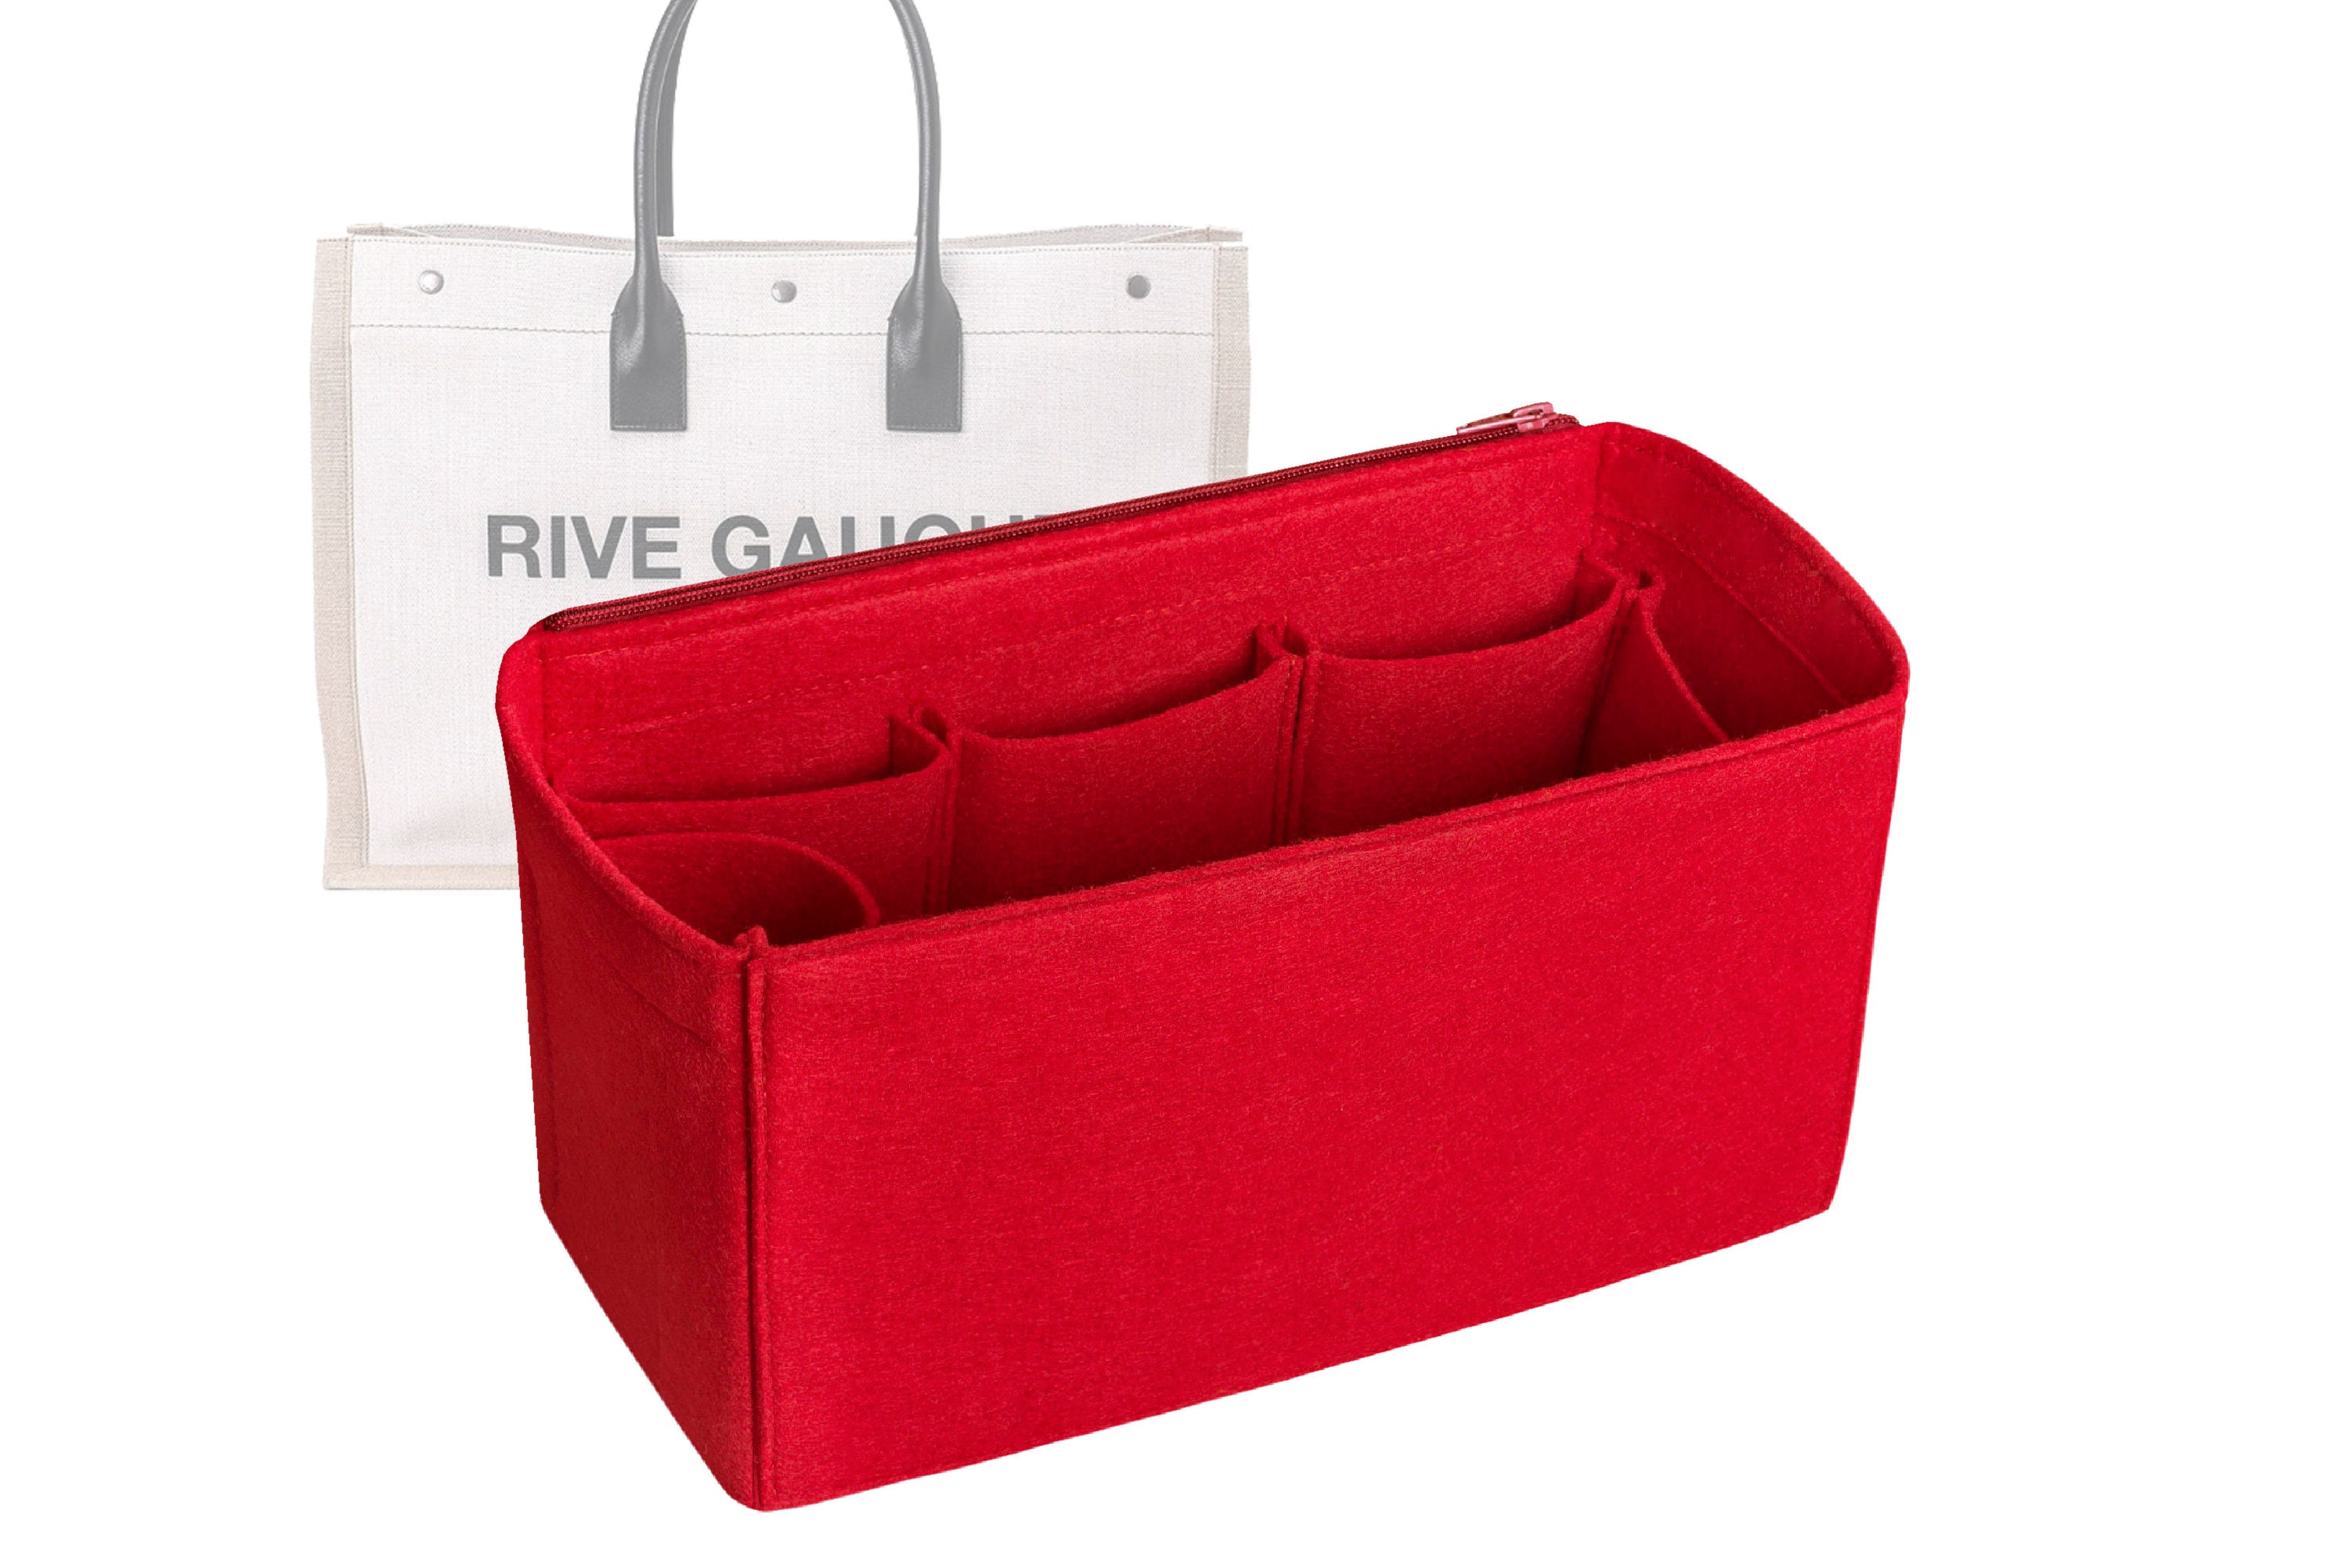 Riverside Bag Organizer / Tote Riverside Bag Insert / -  UK